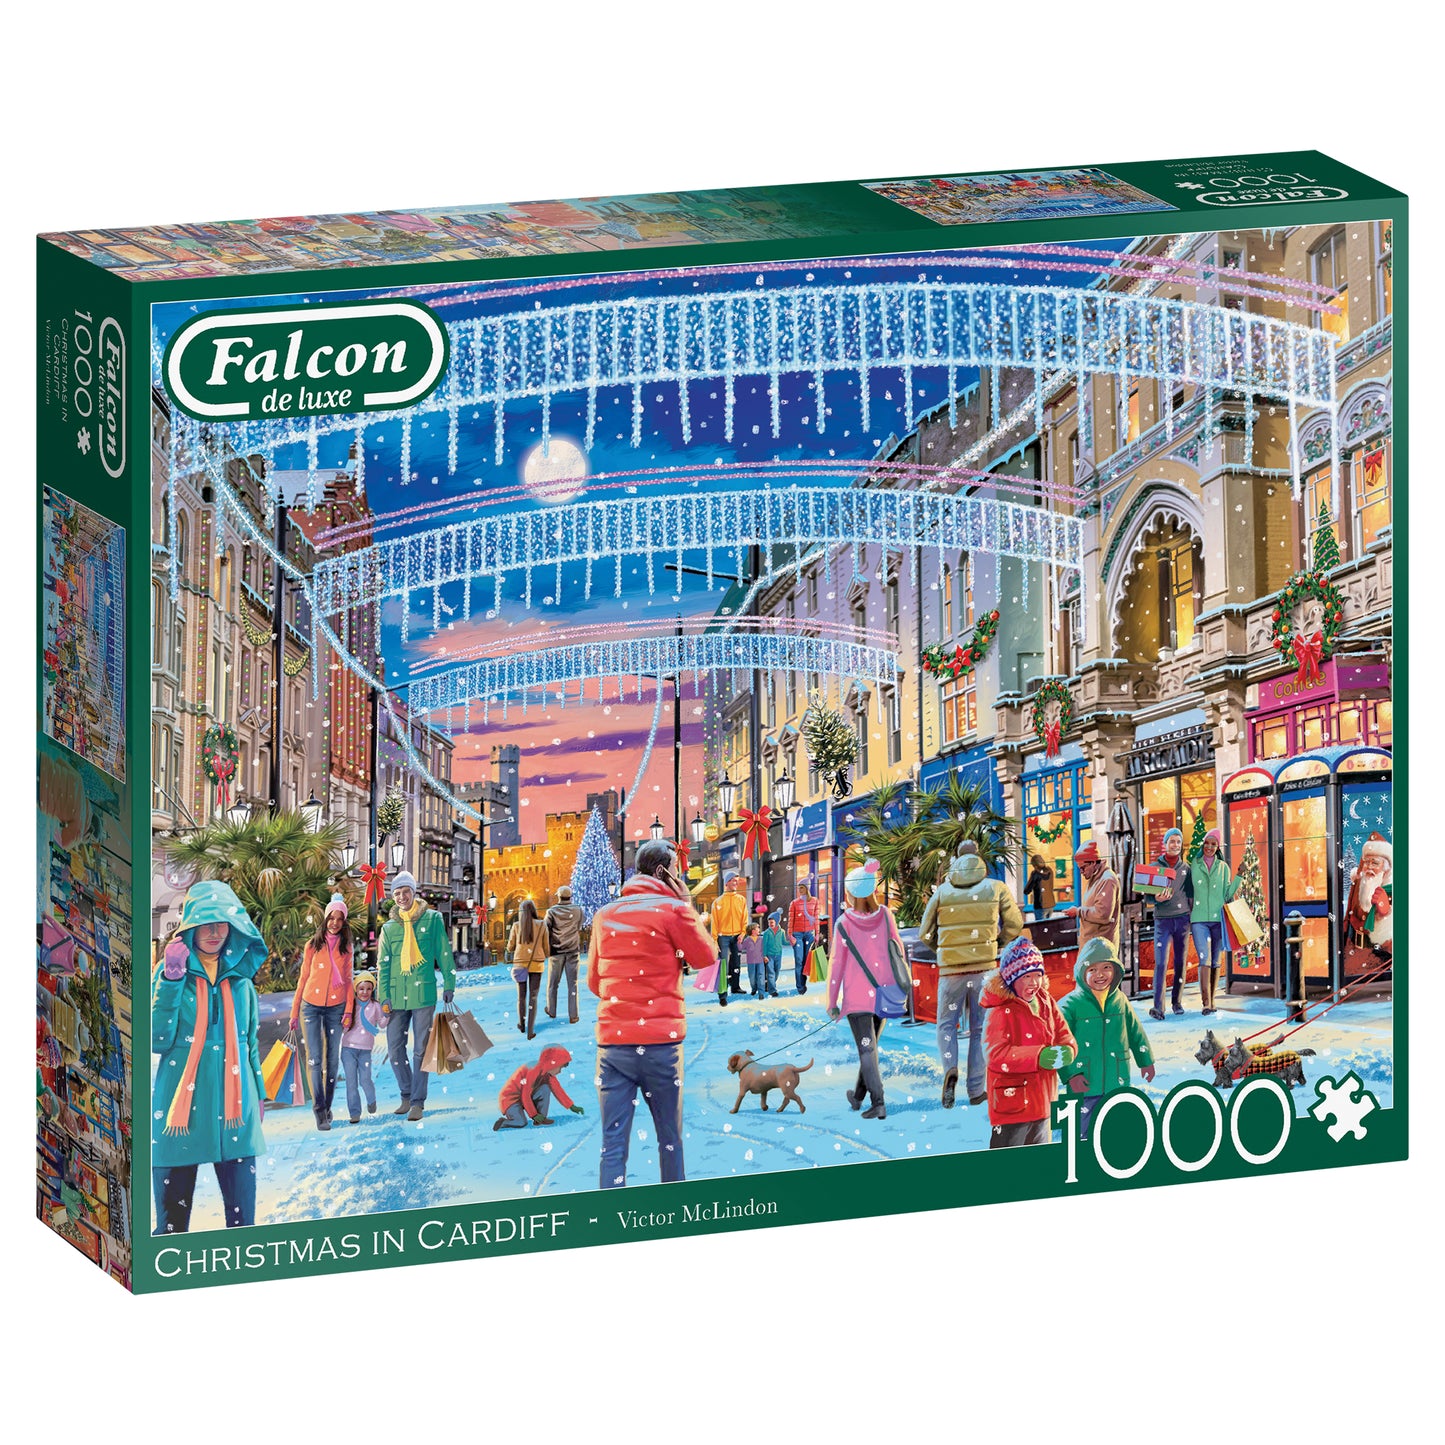 Falcon de luxe - Christmas In Cardiff - 1000 Piece Puzzle